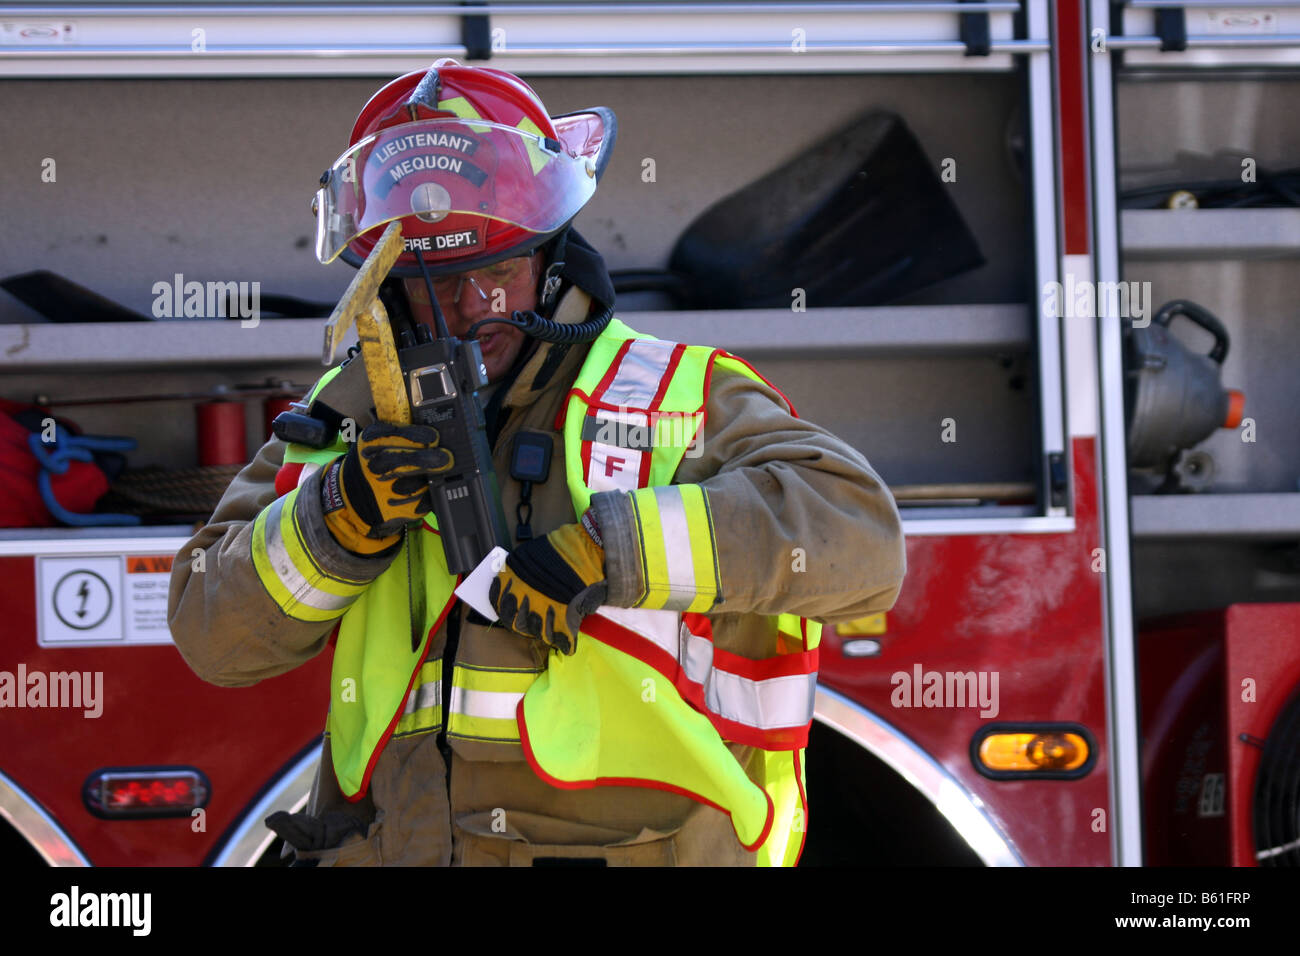 Mequon Fire Department Lieutenant putting his radio inside his coat Wisconsin Stock Photo